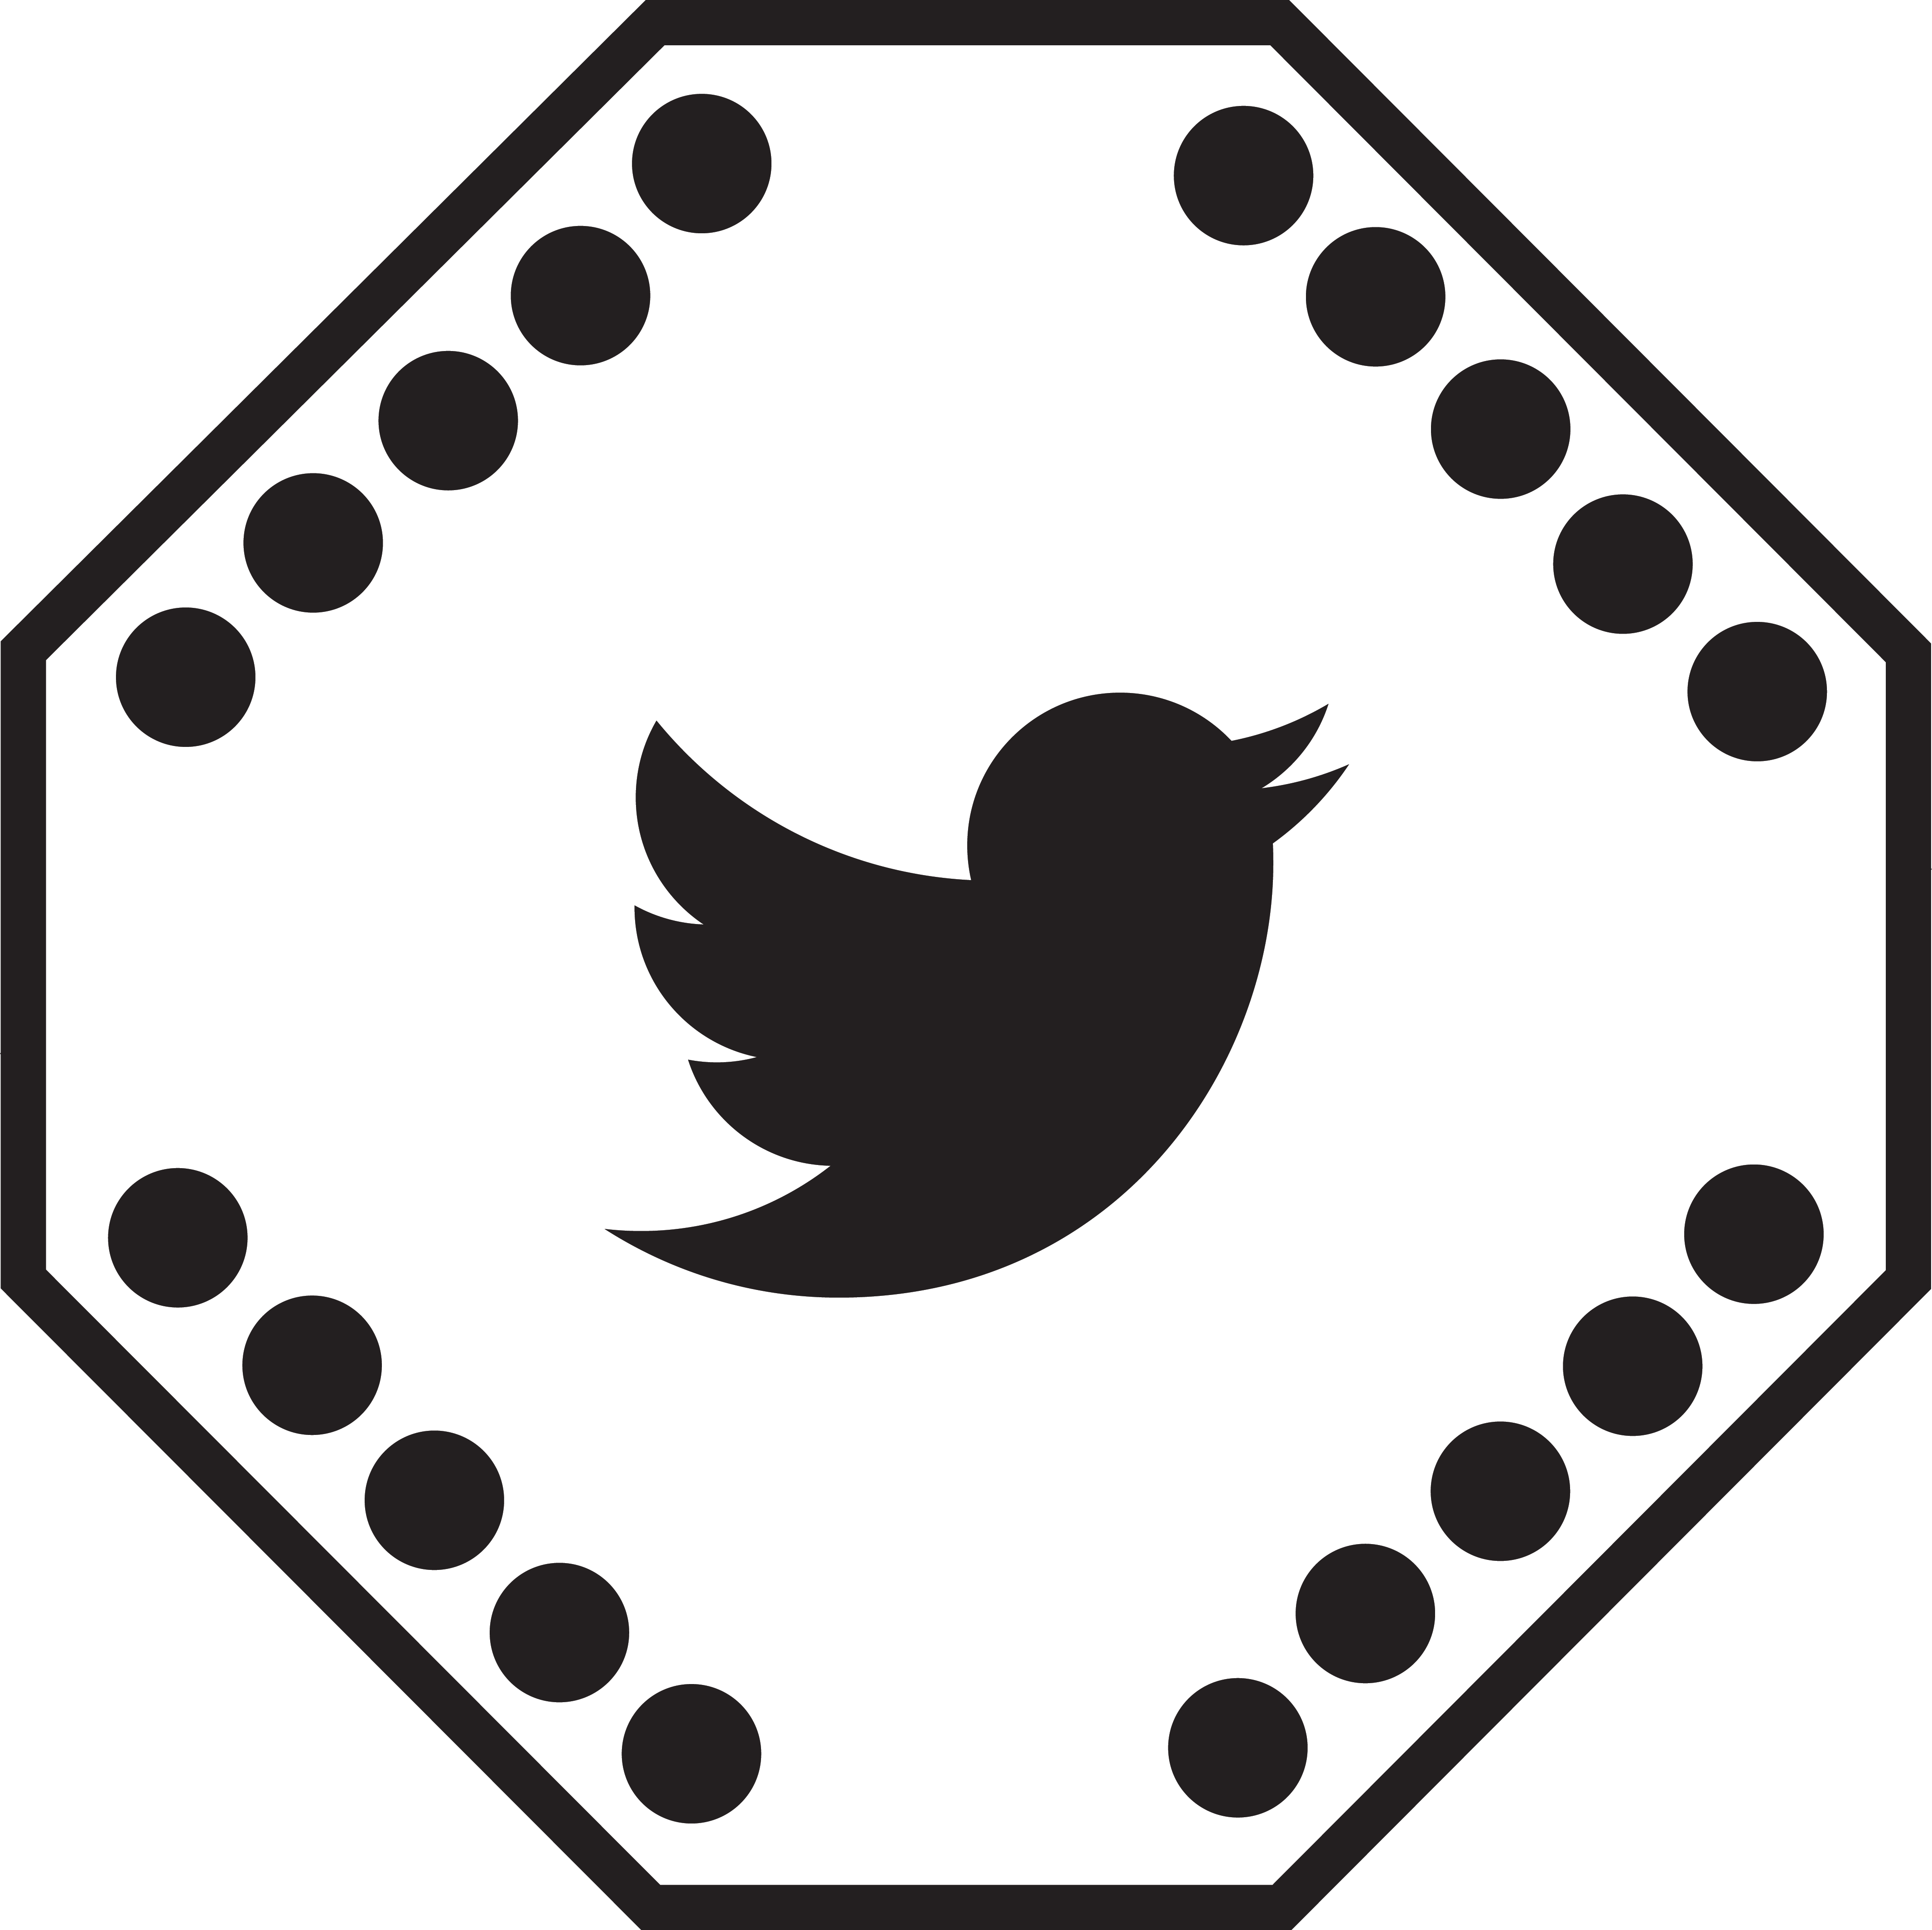 Custom Social Media Icons - Twitter Icon Size 2017 (4265x4261)